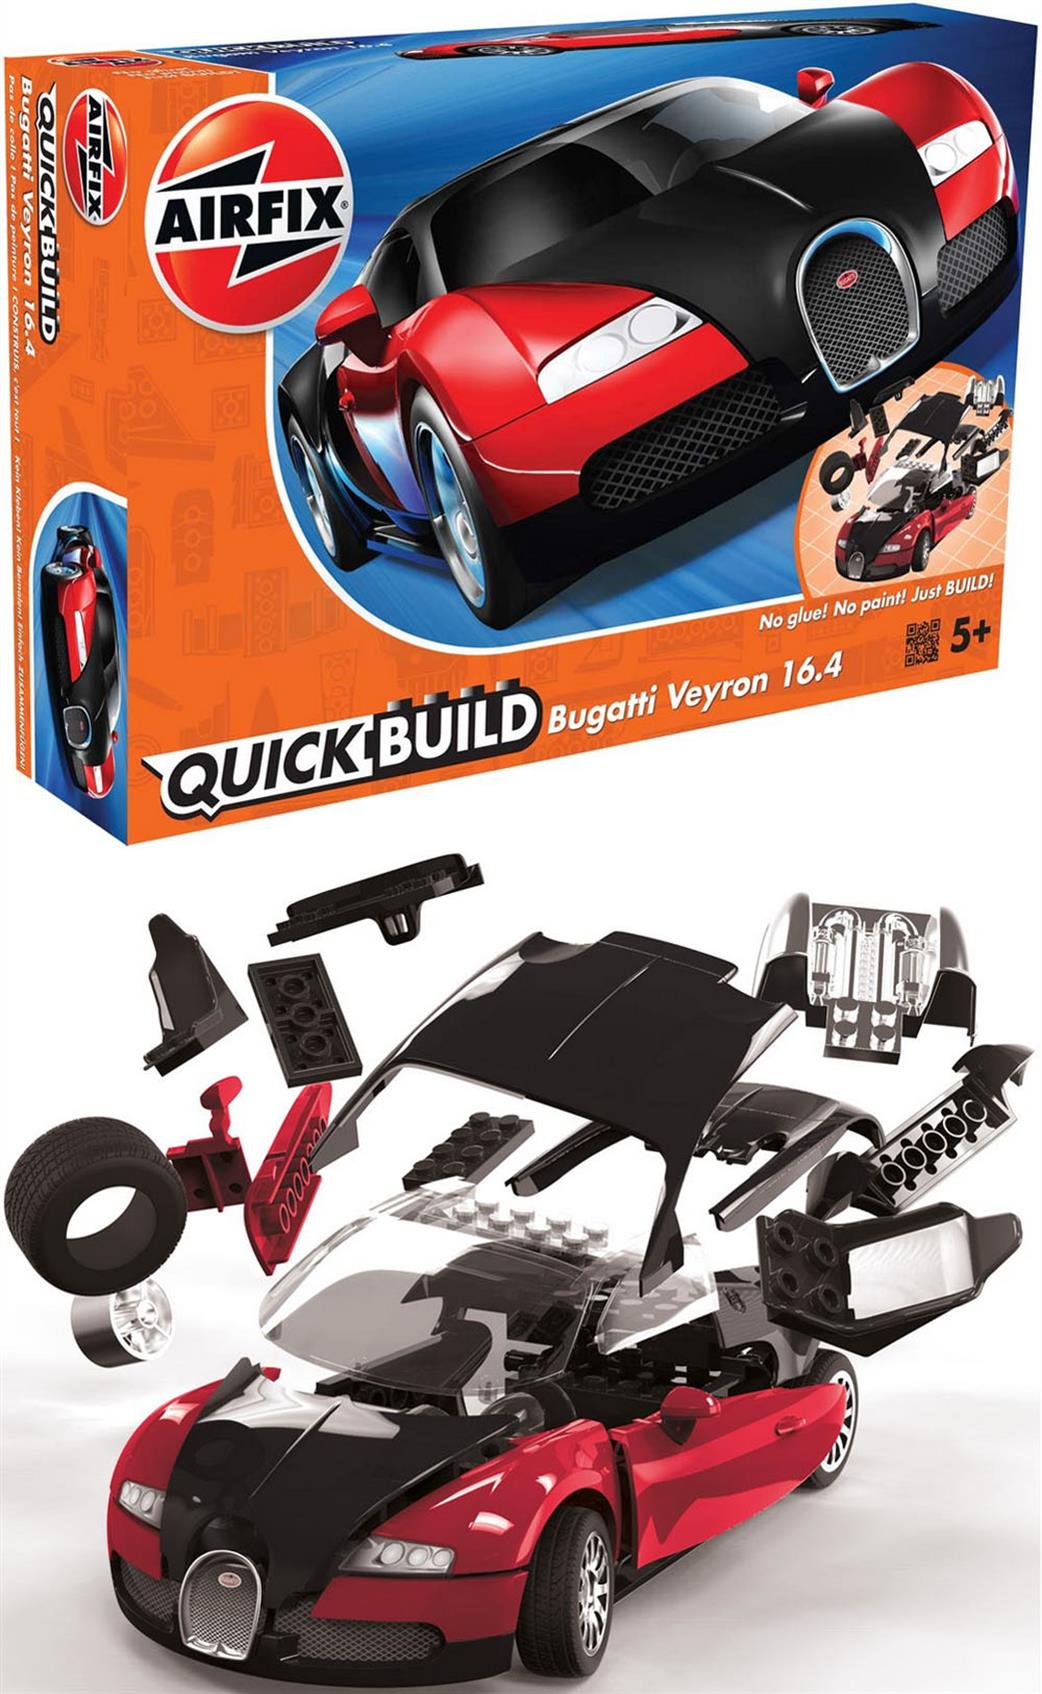 Airfix  J6020 Quickbuild Bugatti Veyron Black & Red Clip together Block Model